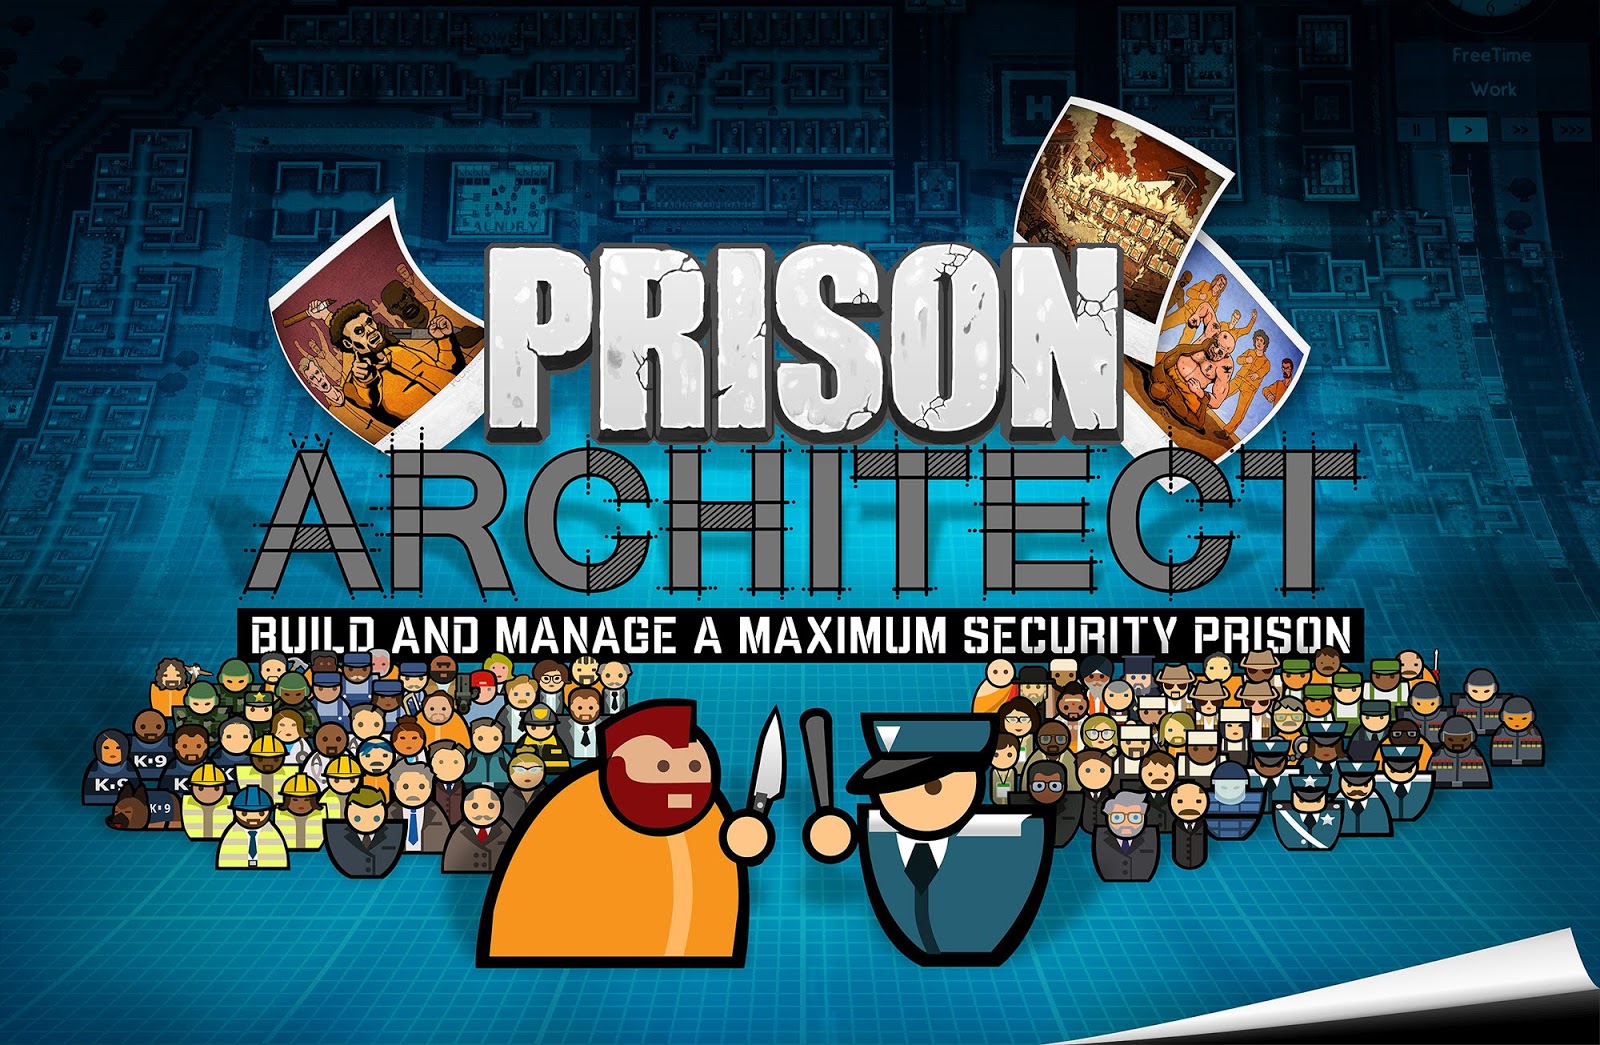 prison architect download free full version pc all dlc